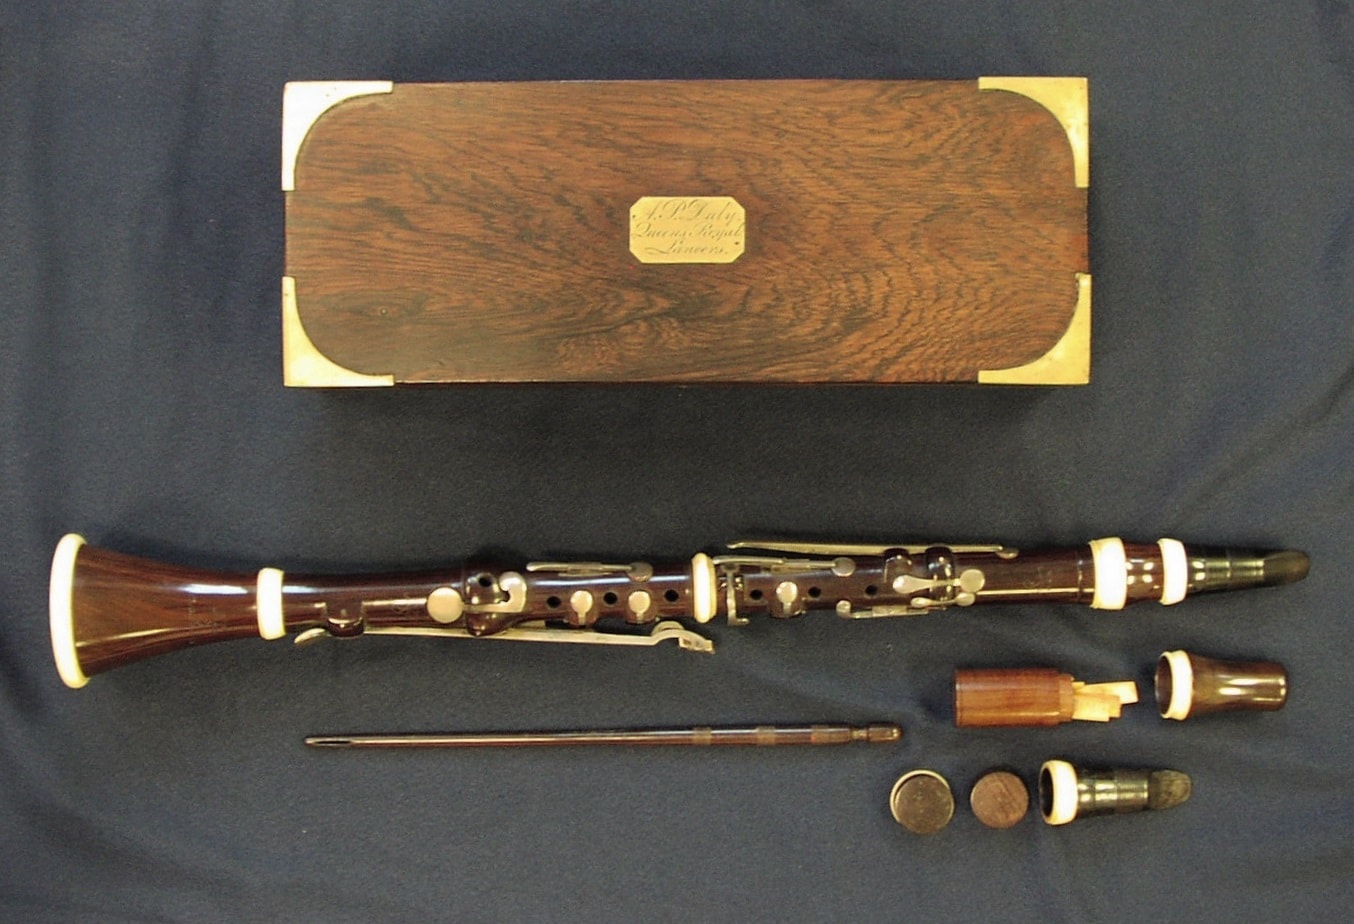 Abraham Duly's clarinet